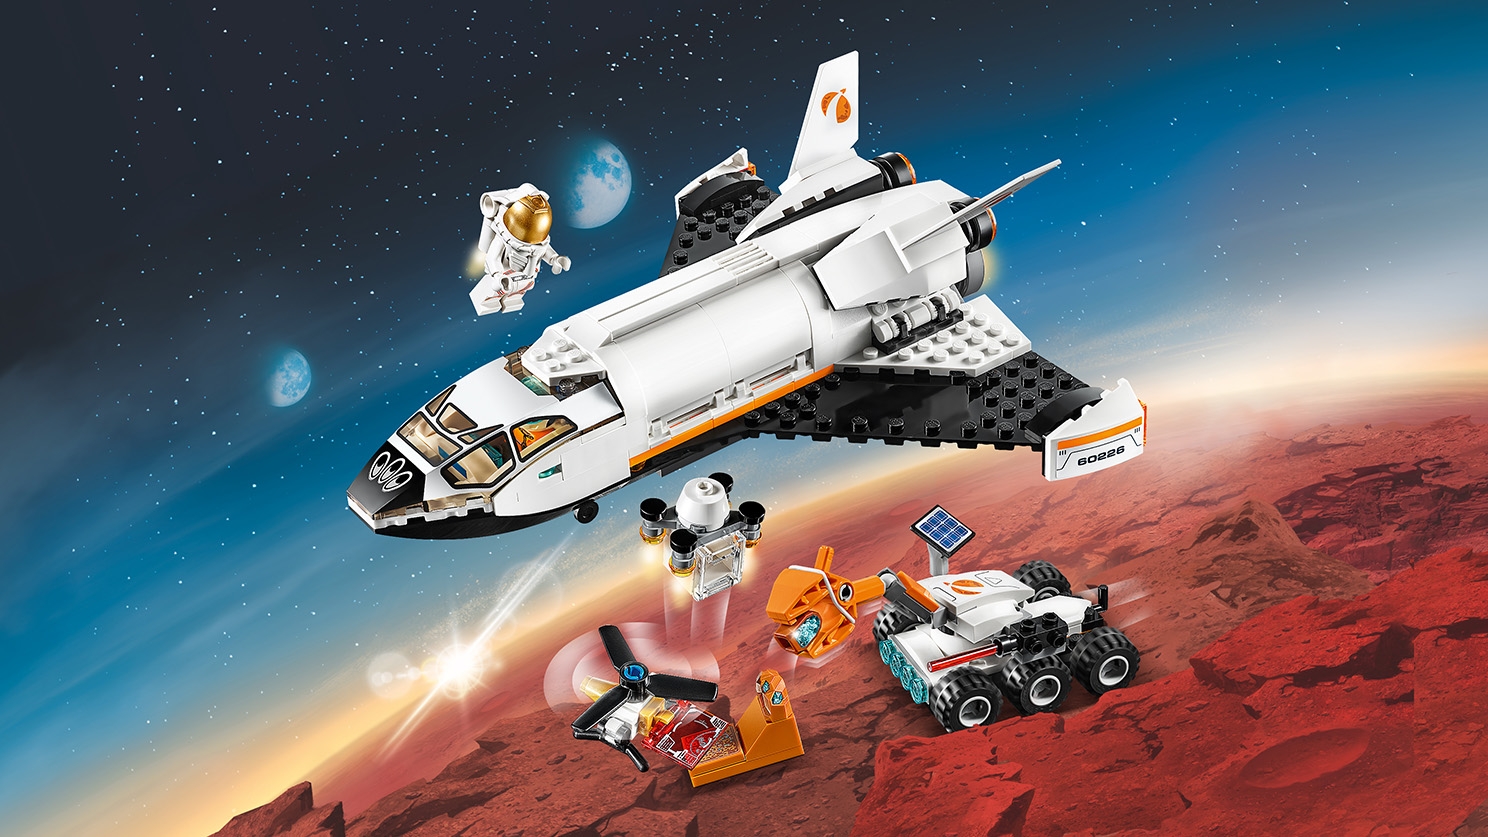 LEGO 60226 Mars Research Shuttle 